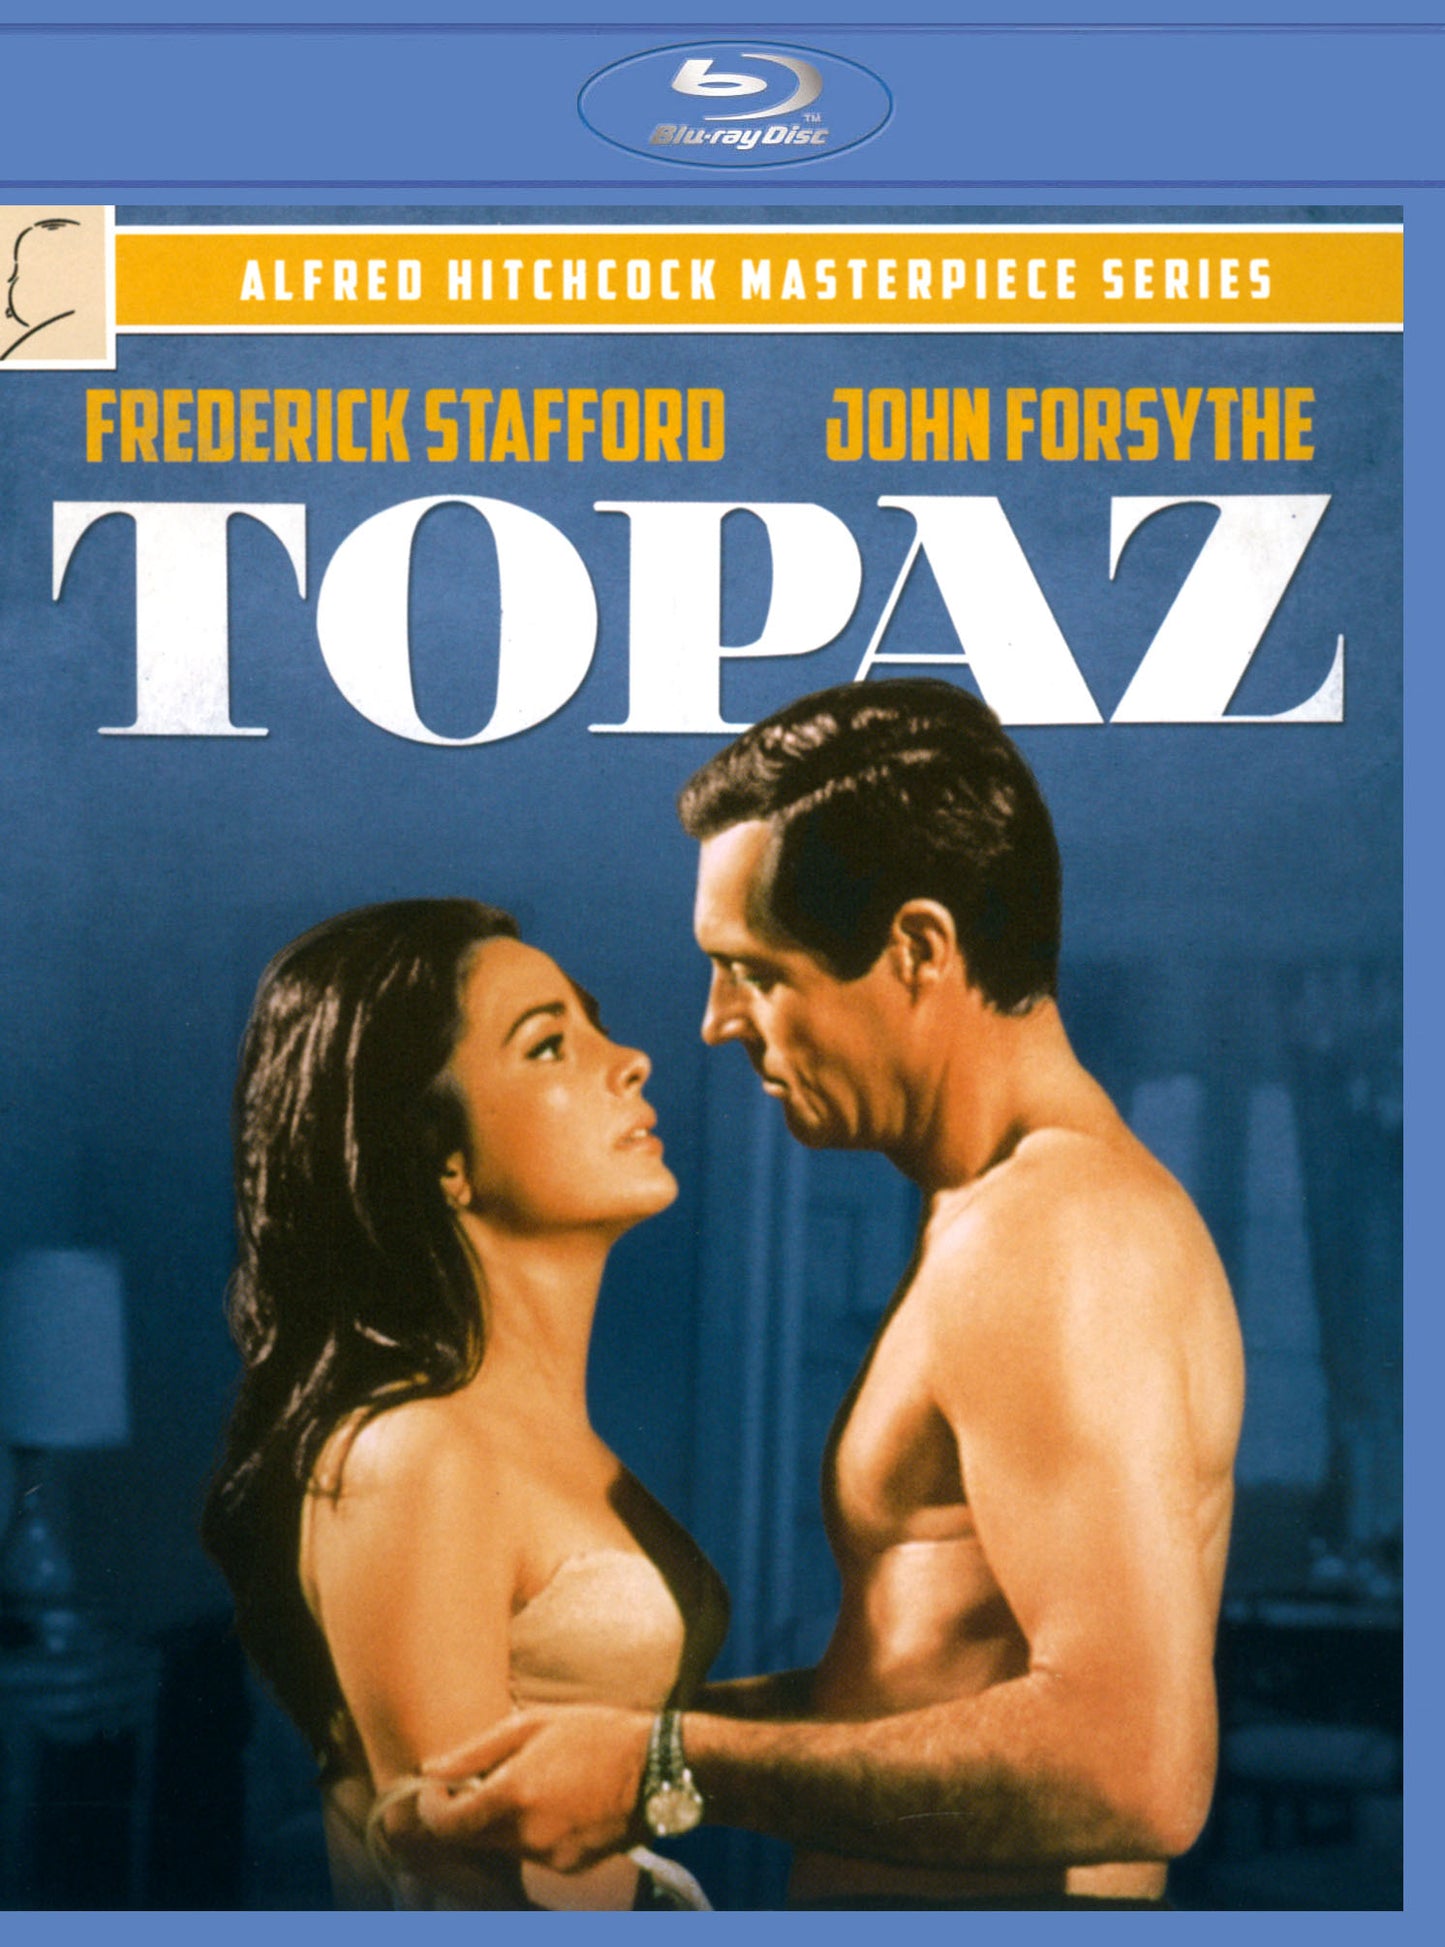 Topaz [Blu-ray] cover art